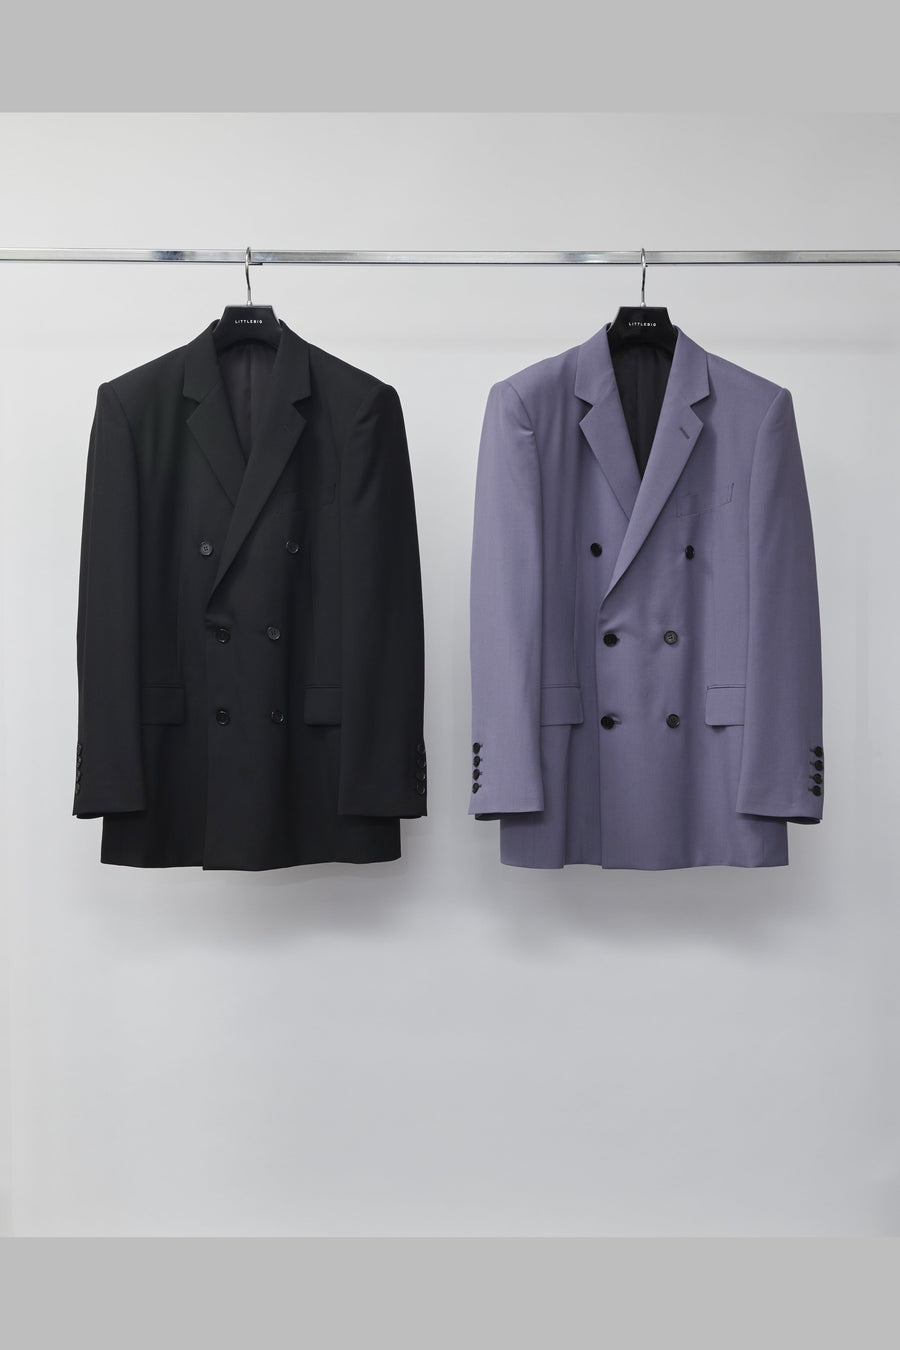 LITTLEBIG  6B Double Breasted Jacket(Purple)